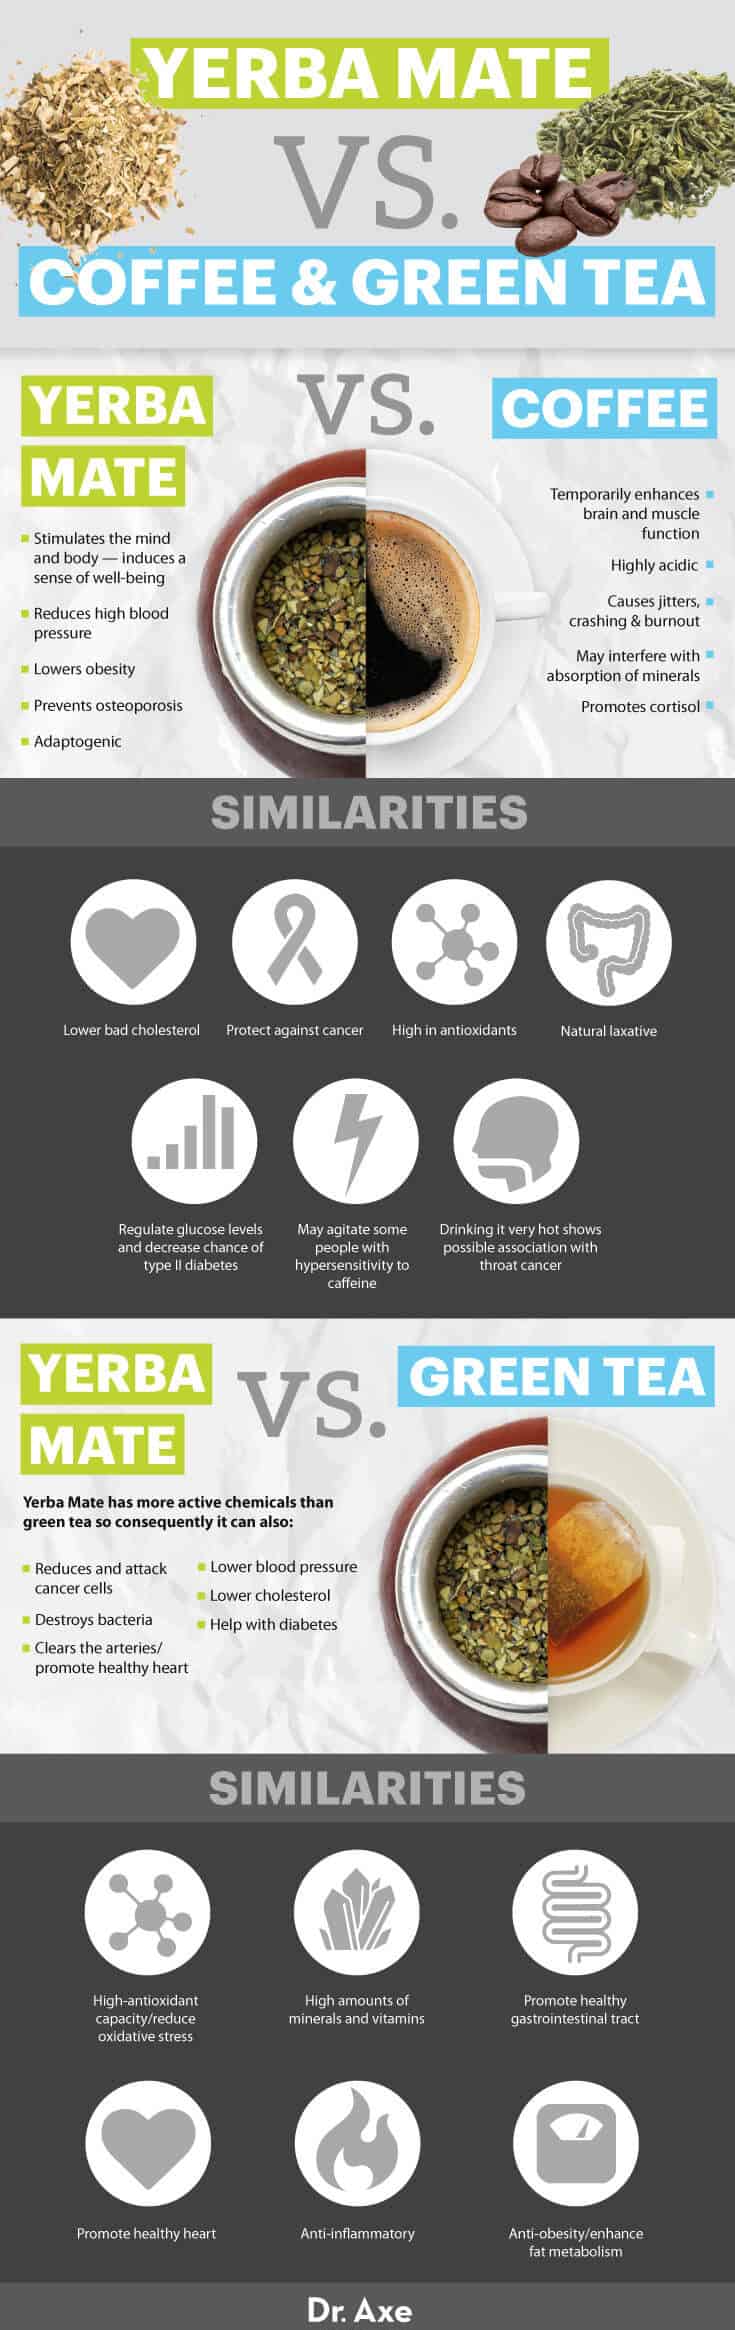 Yerba mate vs. coffee & green tea - Dr. Axe